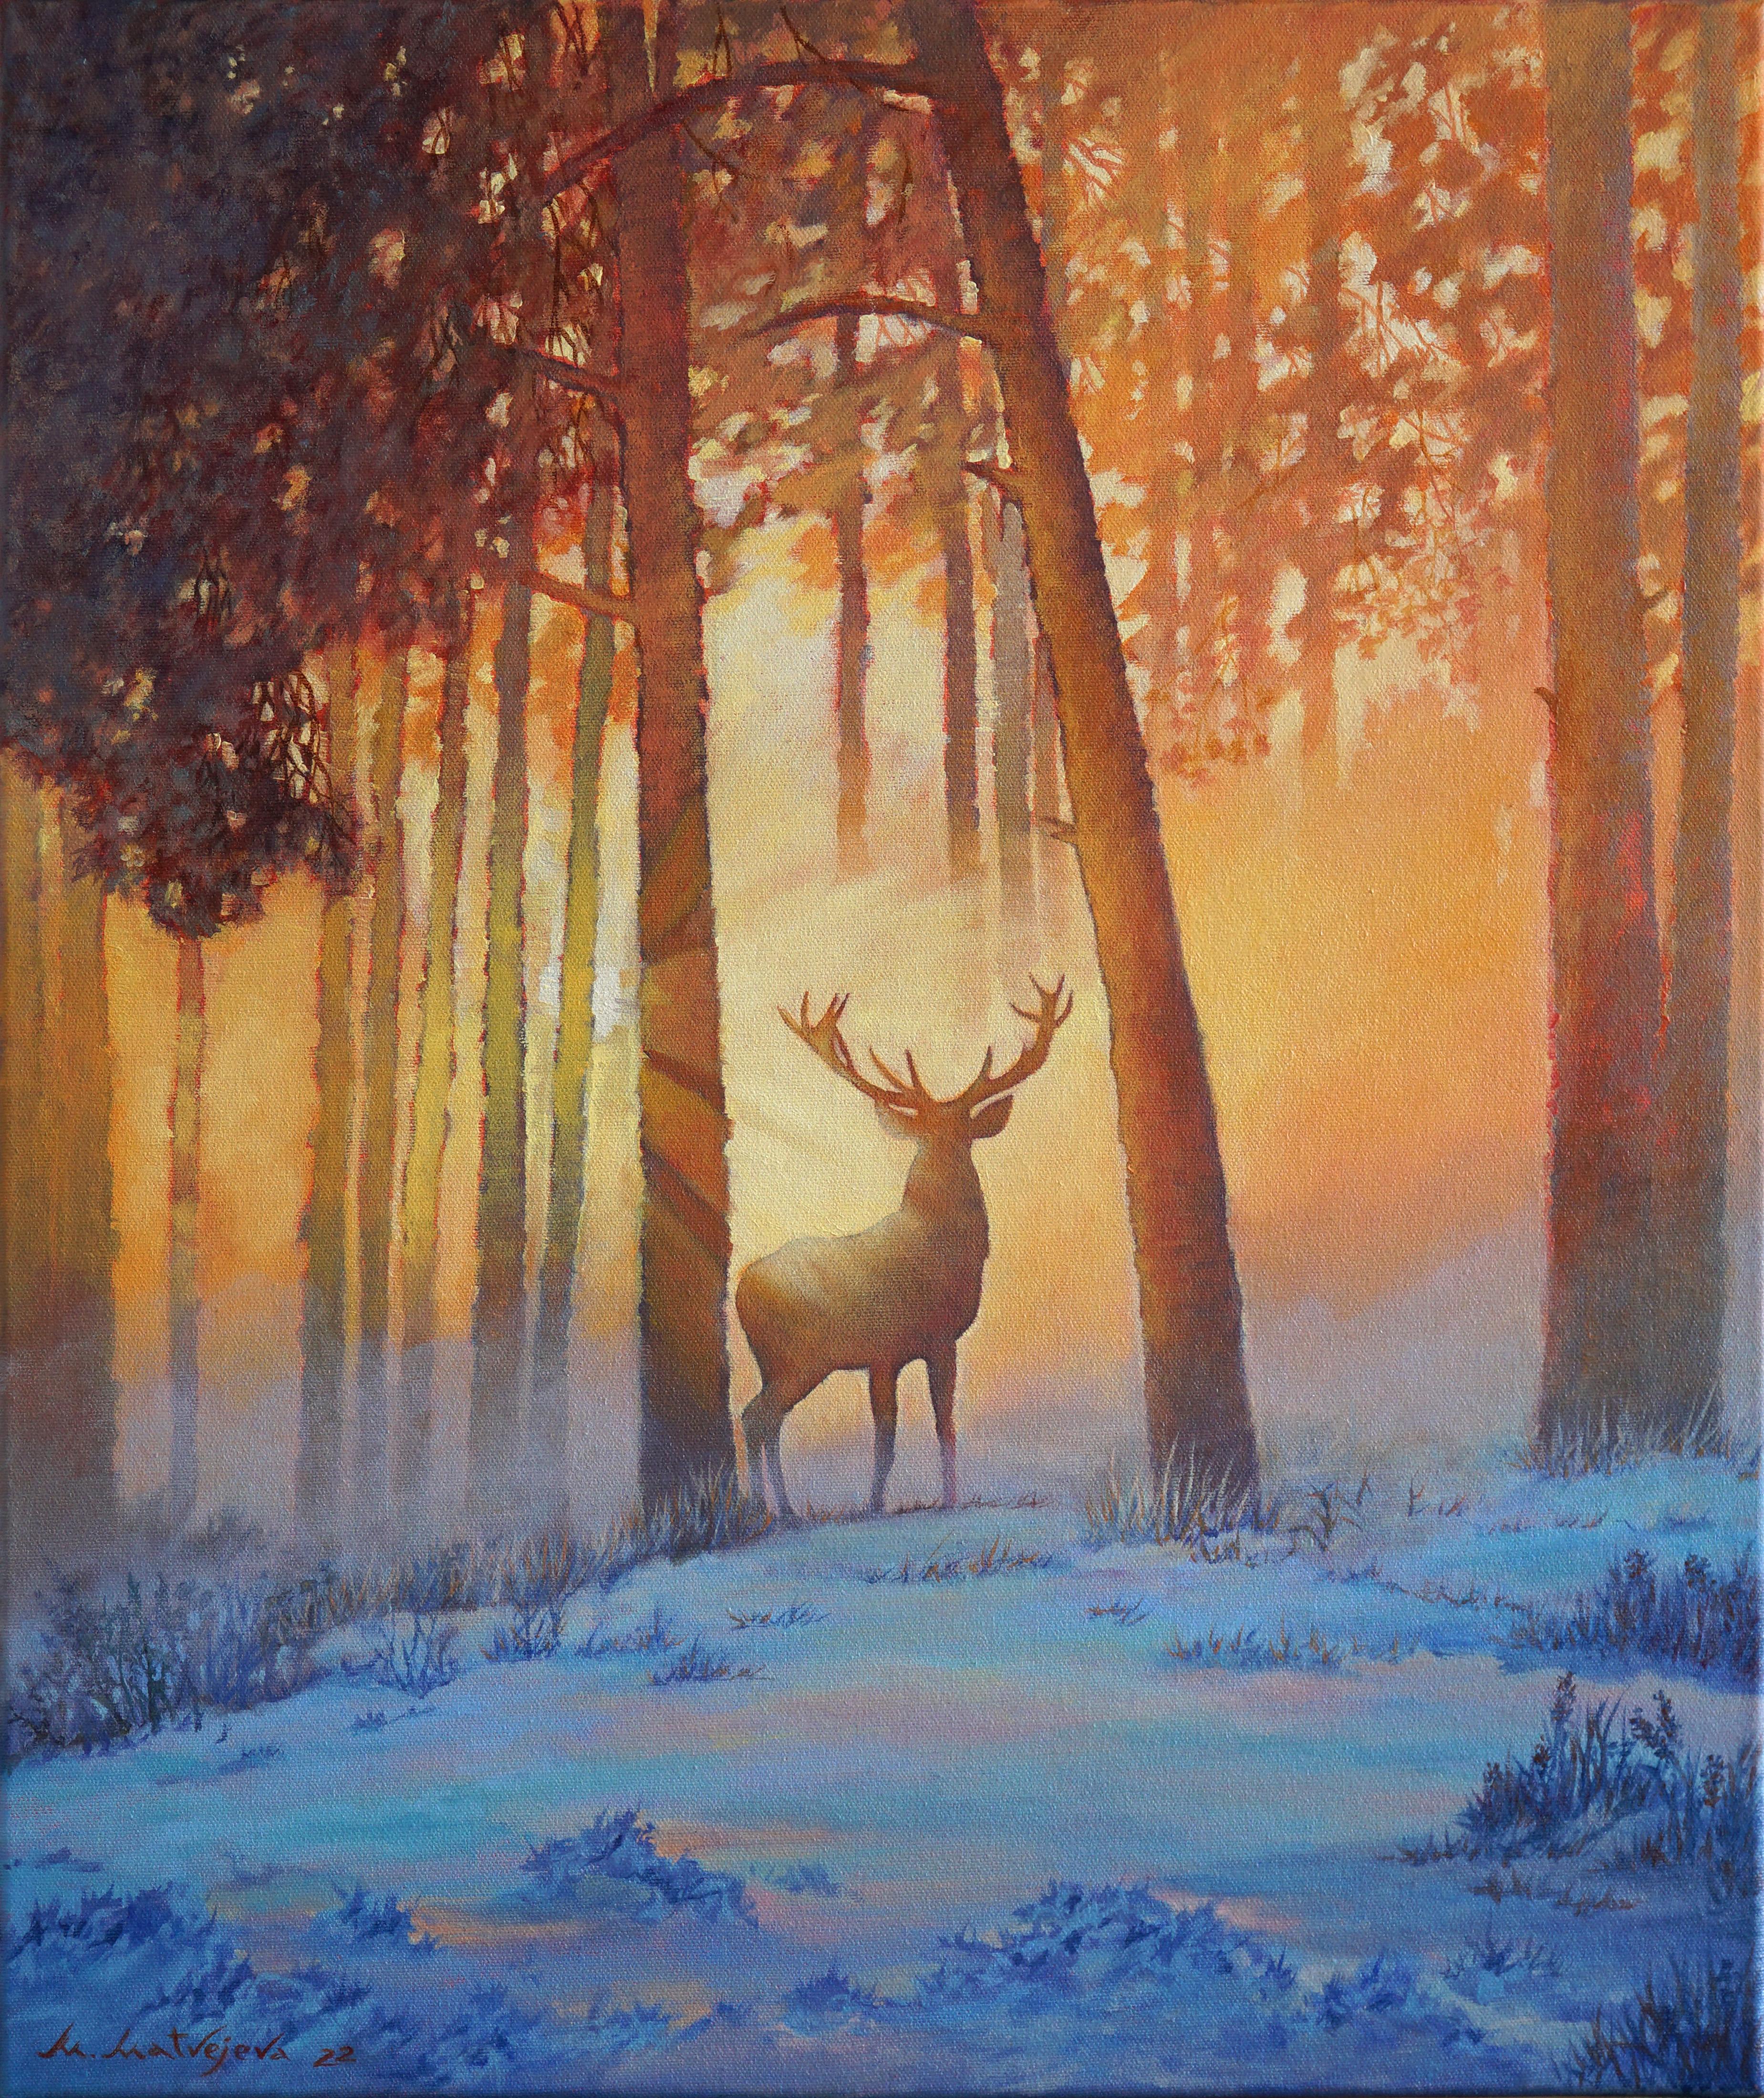 Maria Matveyeva Landscape Print - Forest Spirit print on canvas Christmas gift